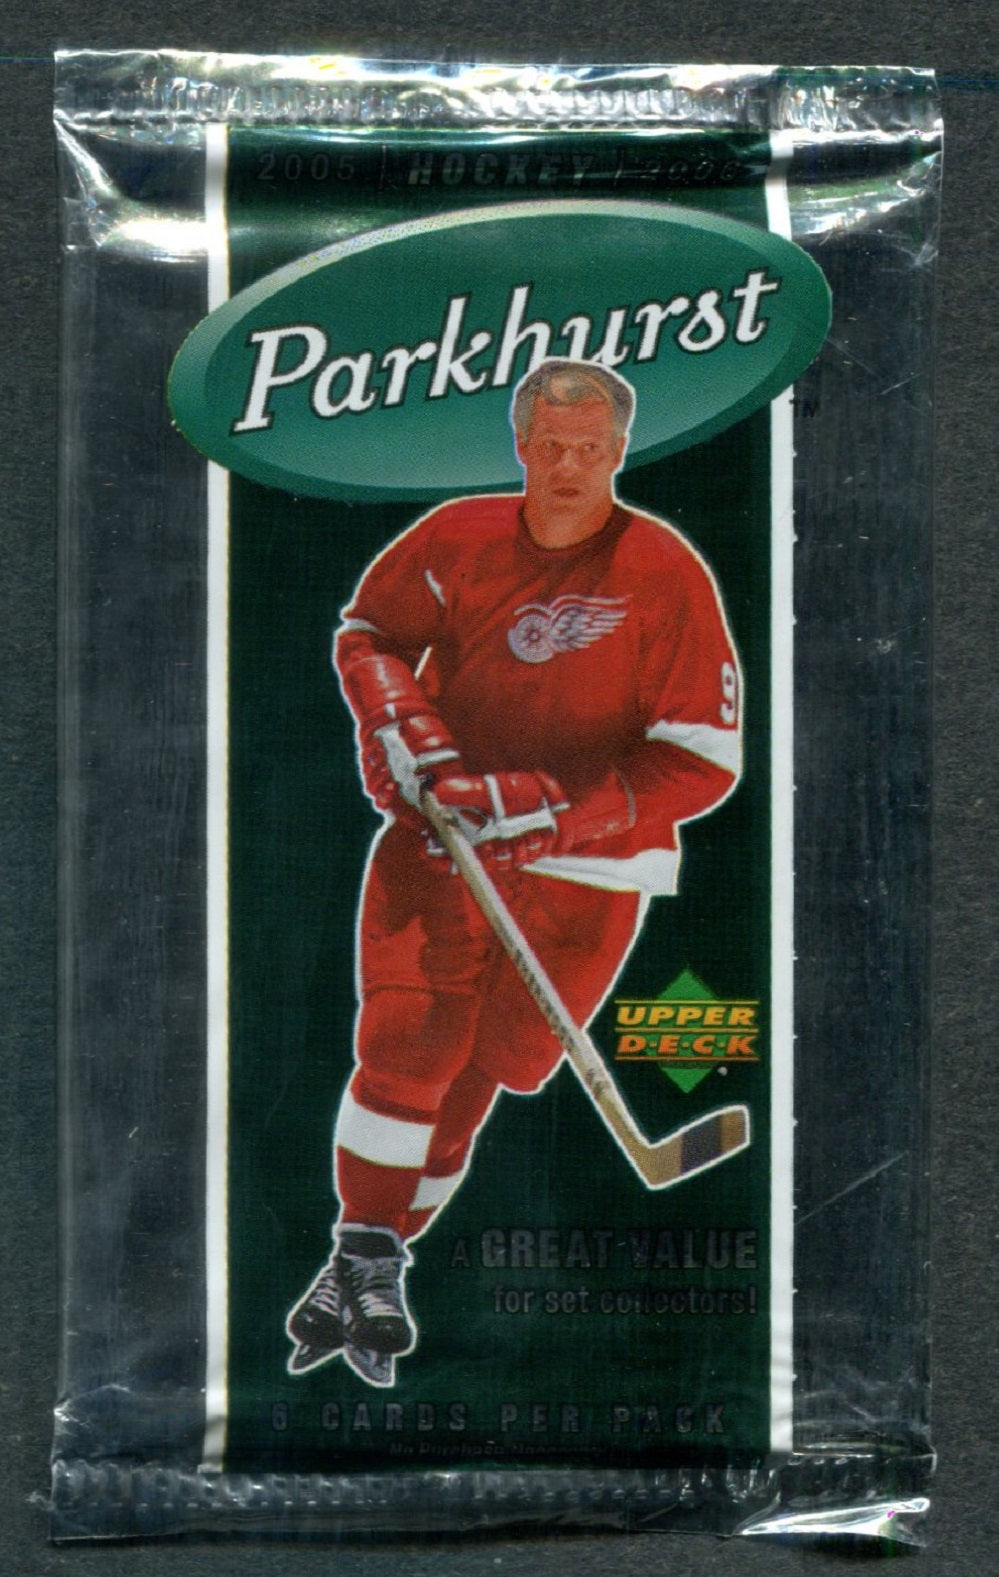 2005/06 Upper Deck Parkhurst Hockey Unopened Pack (Retail)